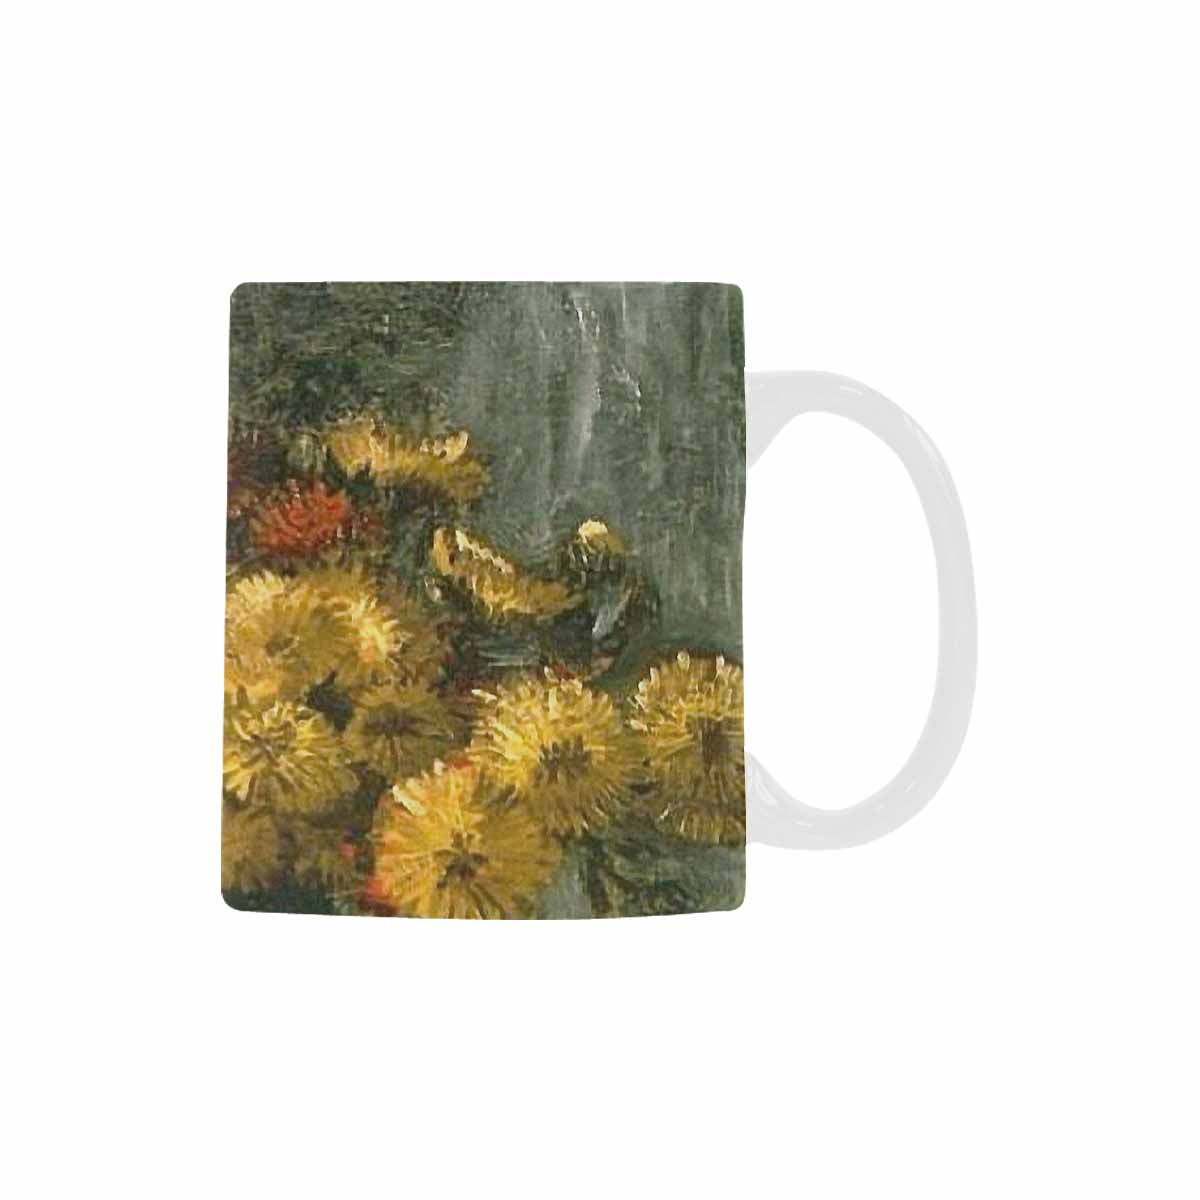 Vintage floral coffee mug or tea cup, Design 28